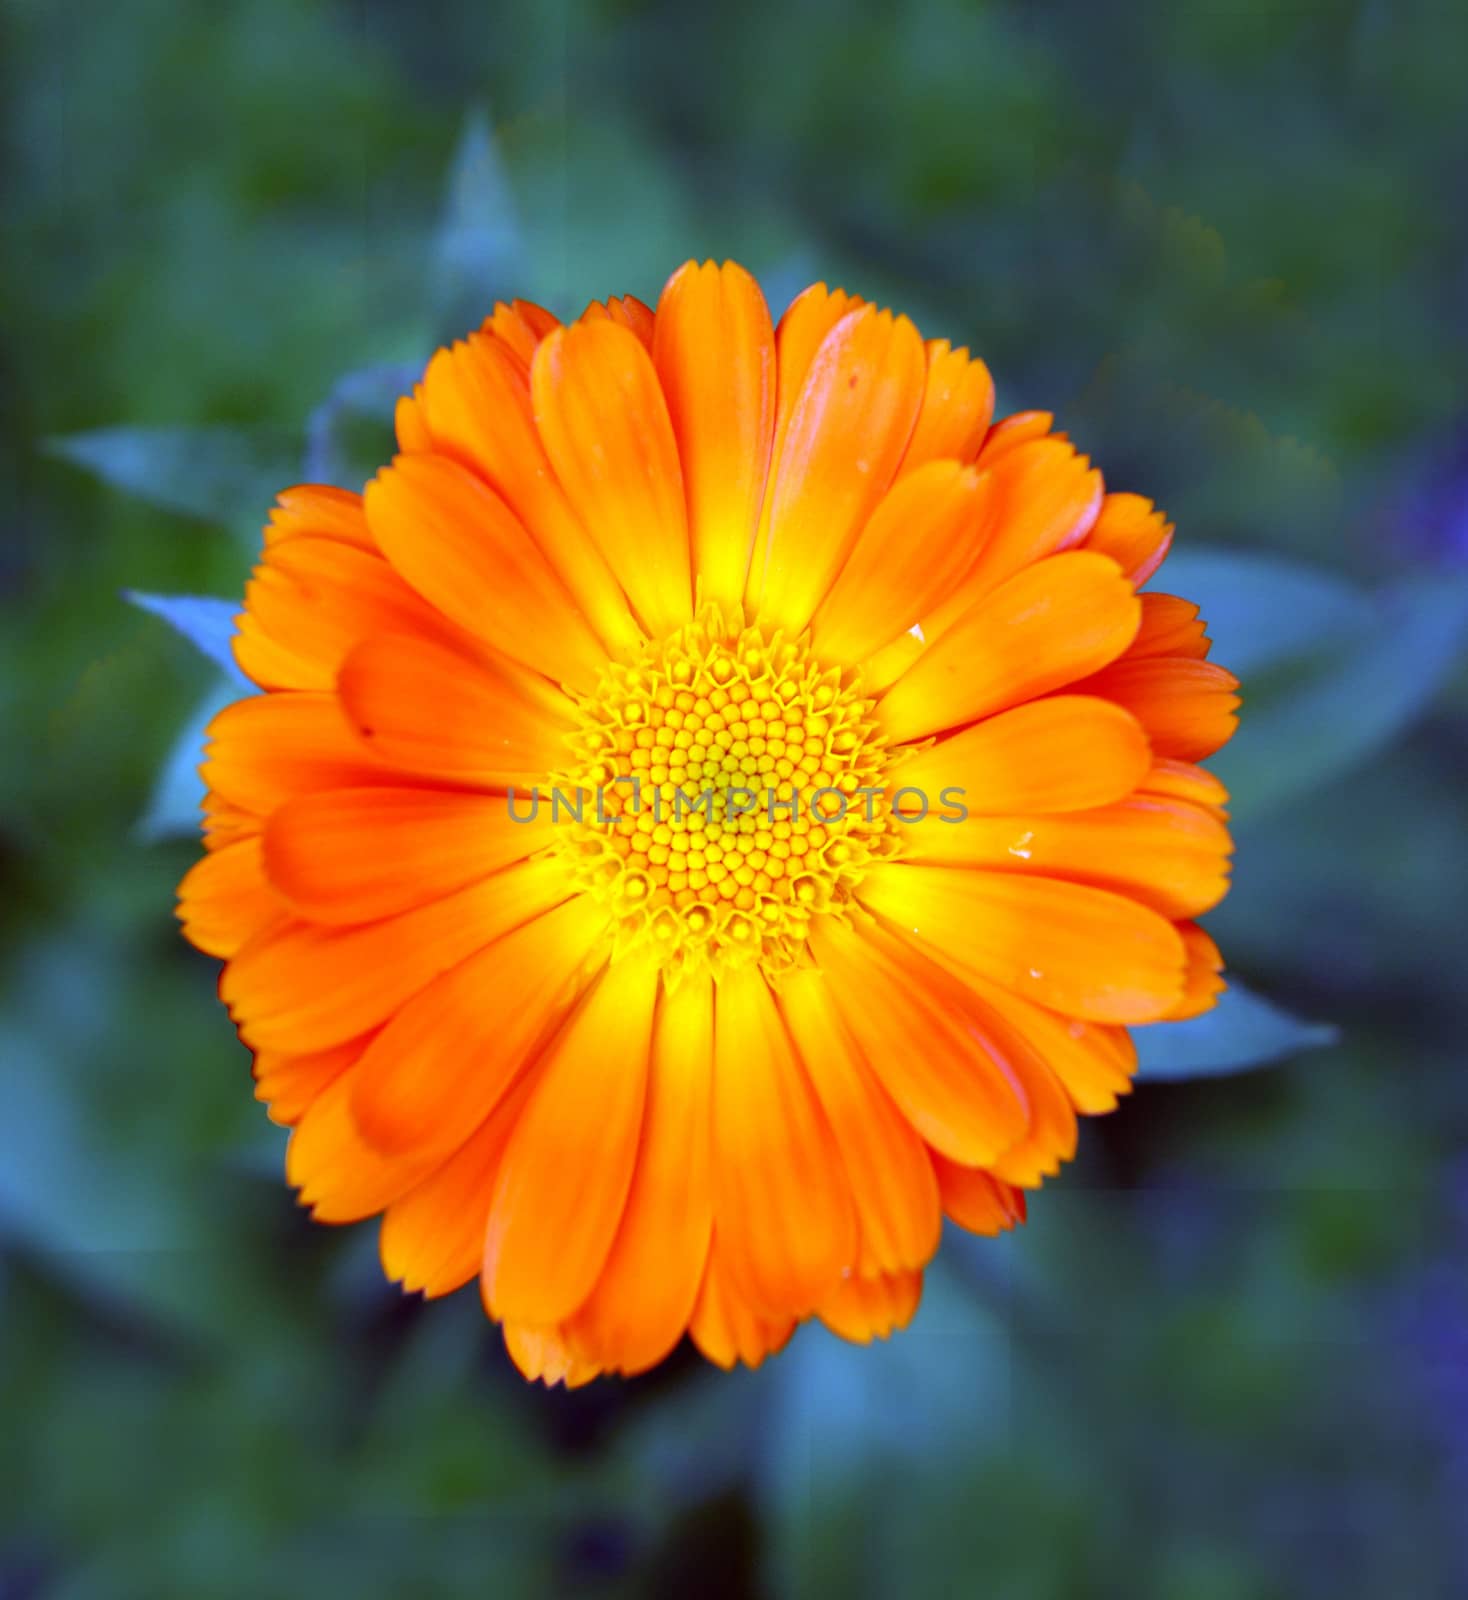 One marigold flower, natural background by cobol1964